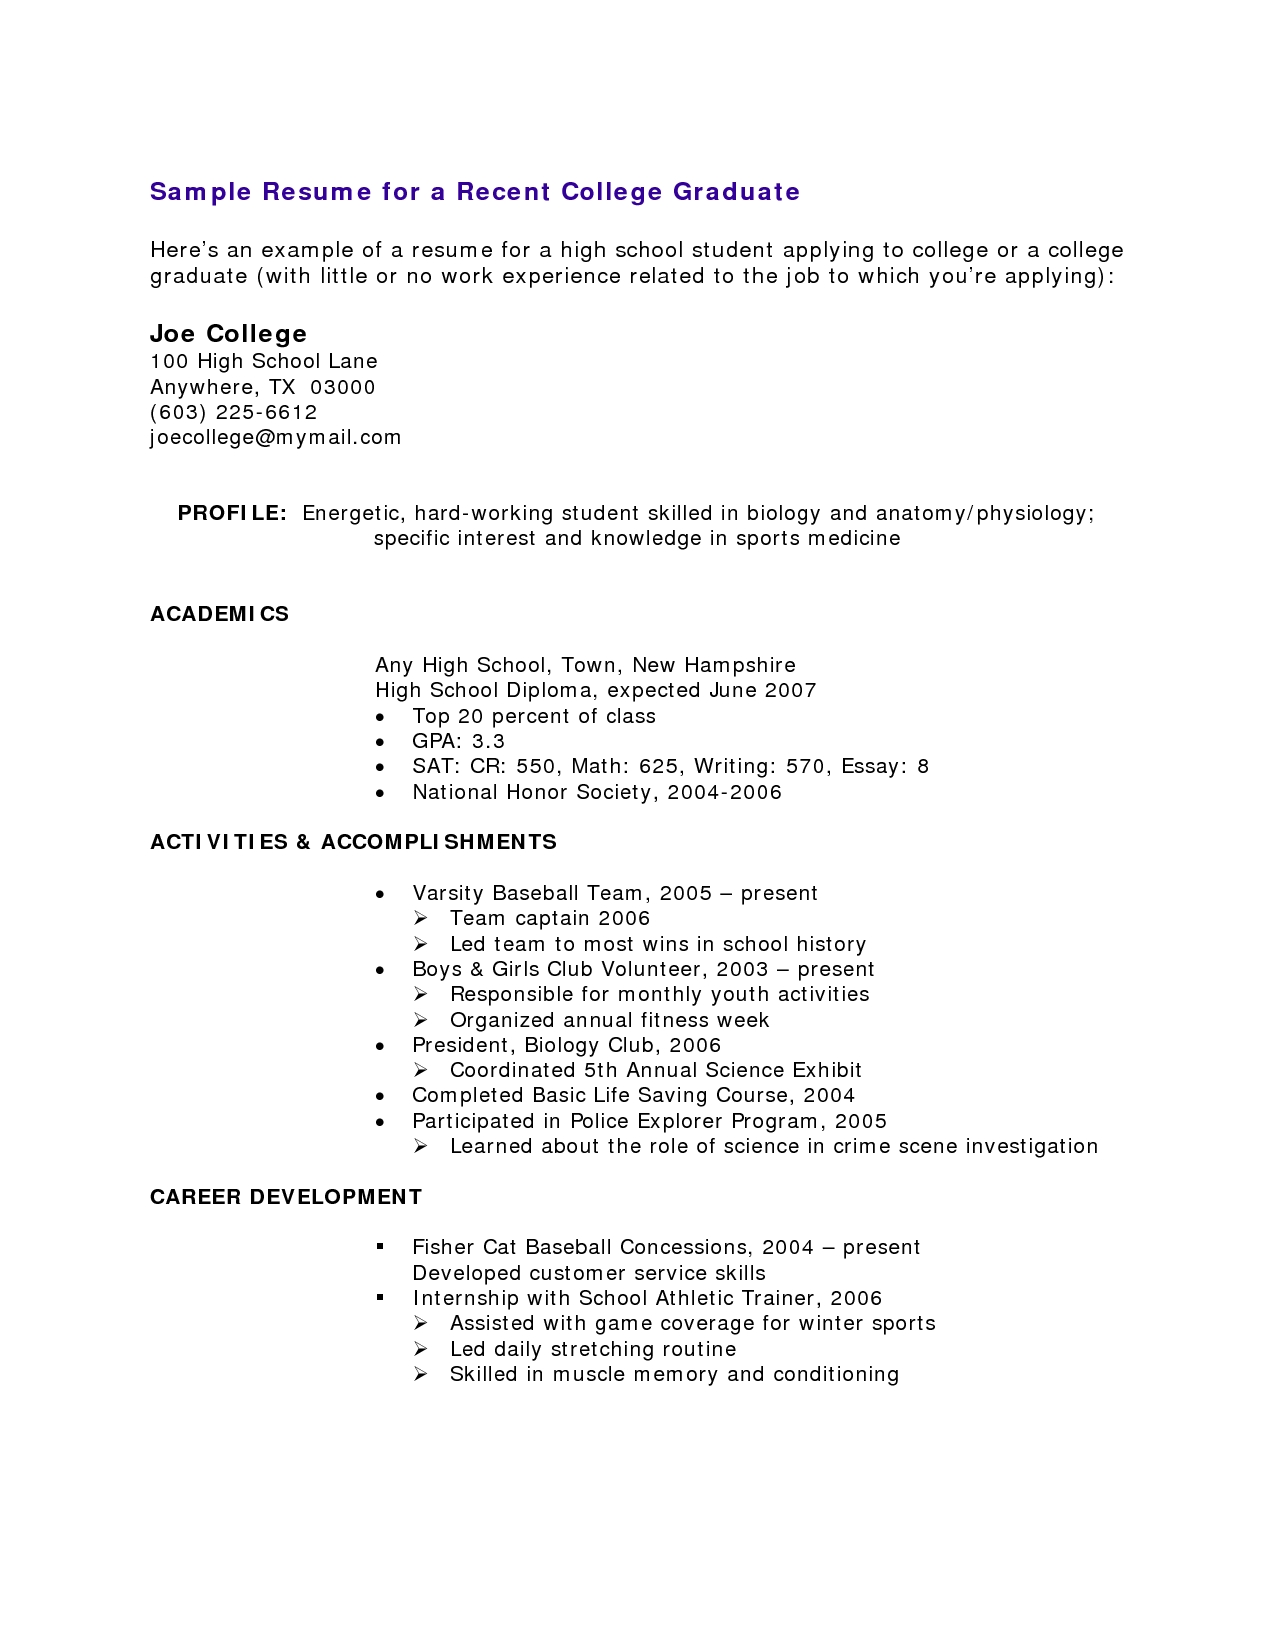 Resume Format One Job 